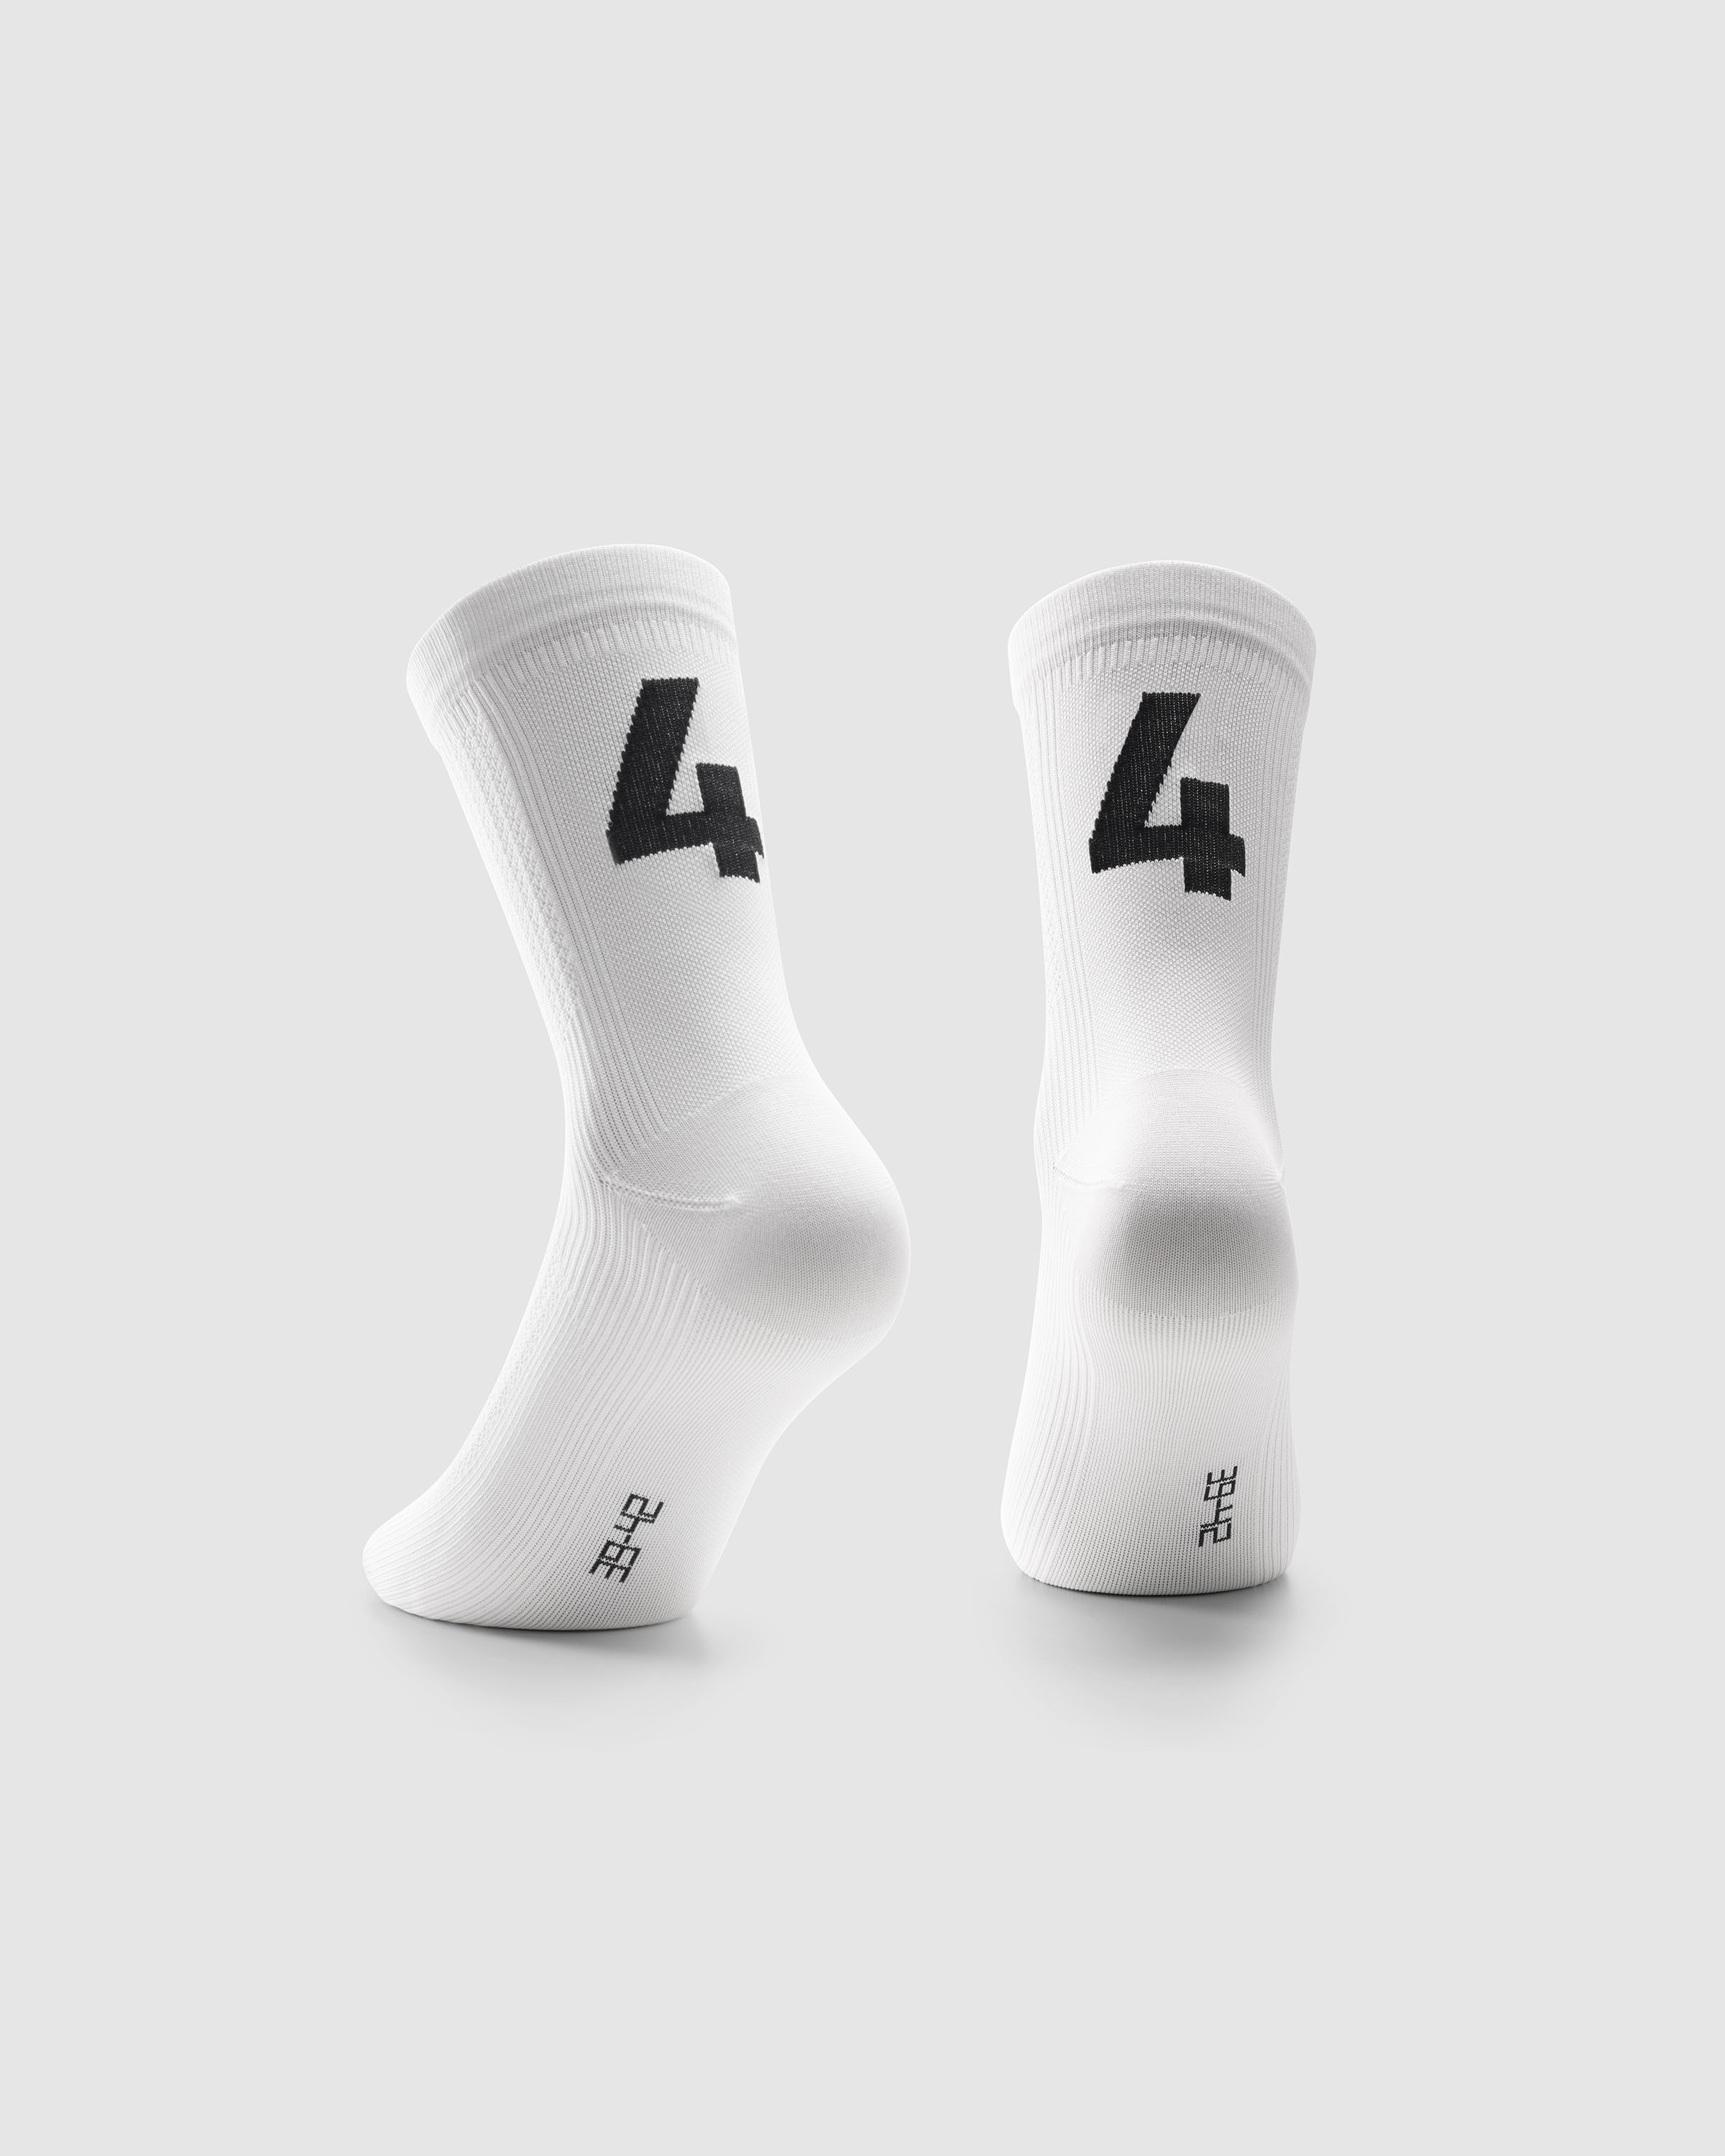 Poker Socks 4 - ASSOS Of Switzerland - Official Outlet